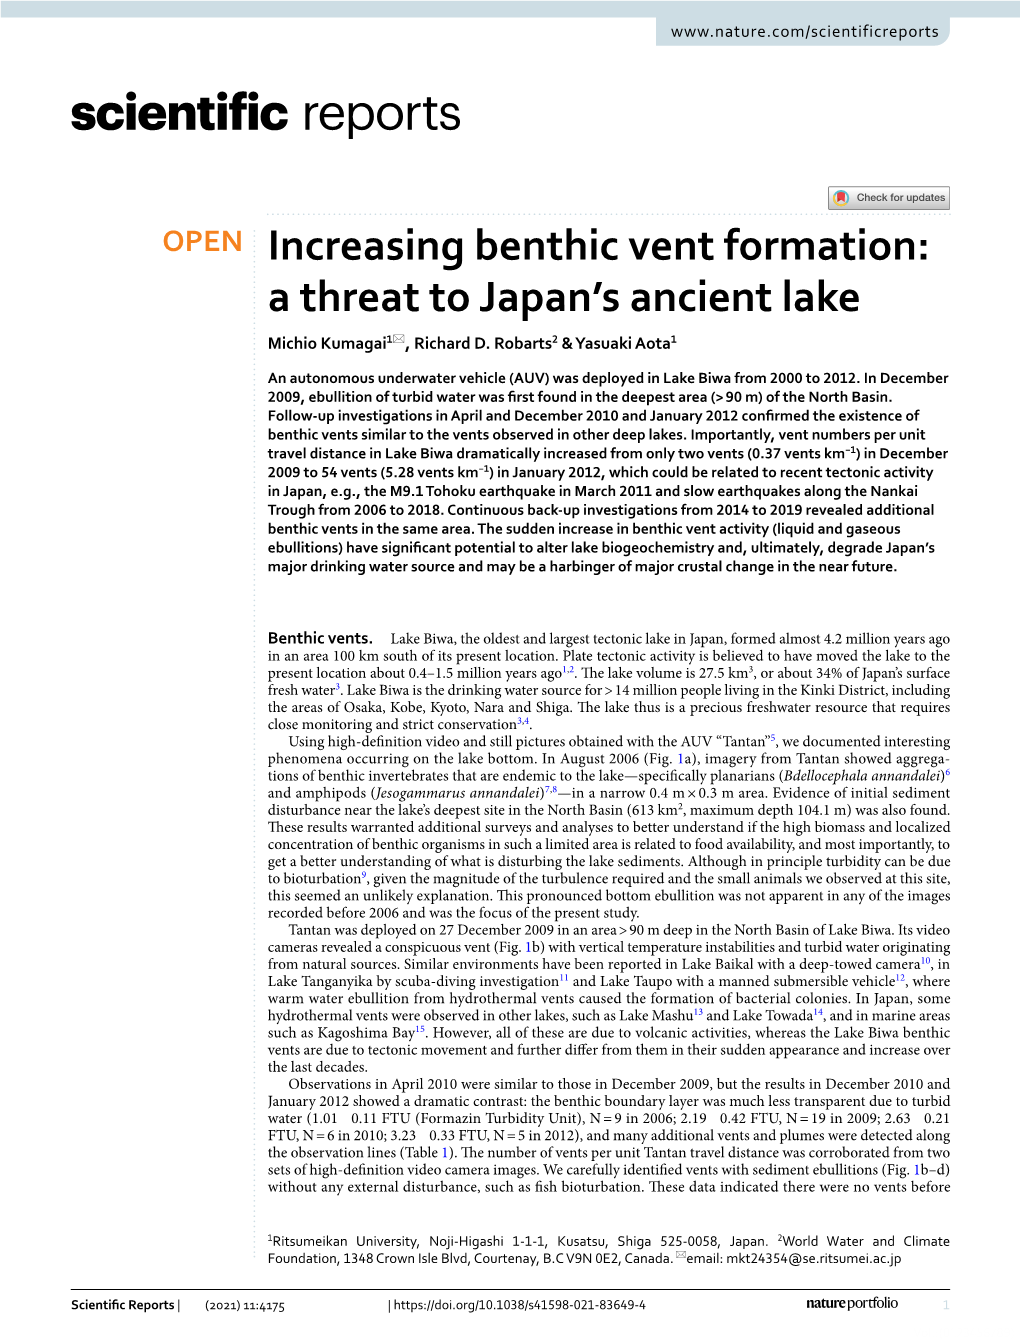 Increasing Benthic Vent Formation: a Threat to Japan’S Ancient Lake Michio Kumagai1*, Richard D